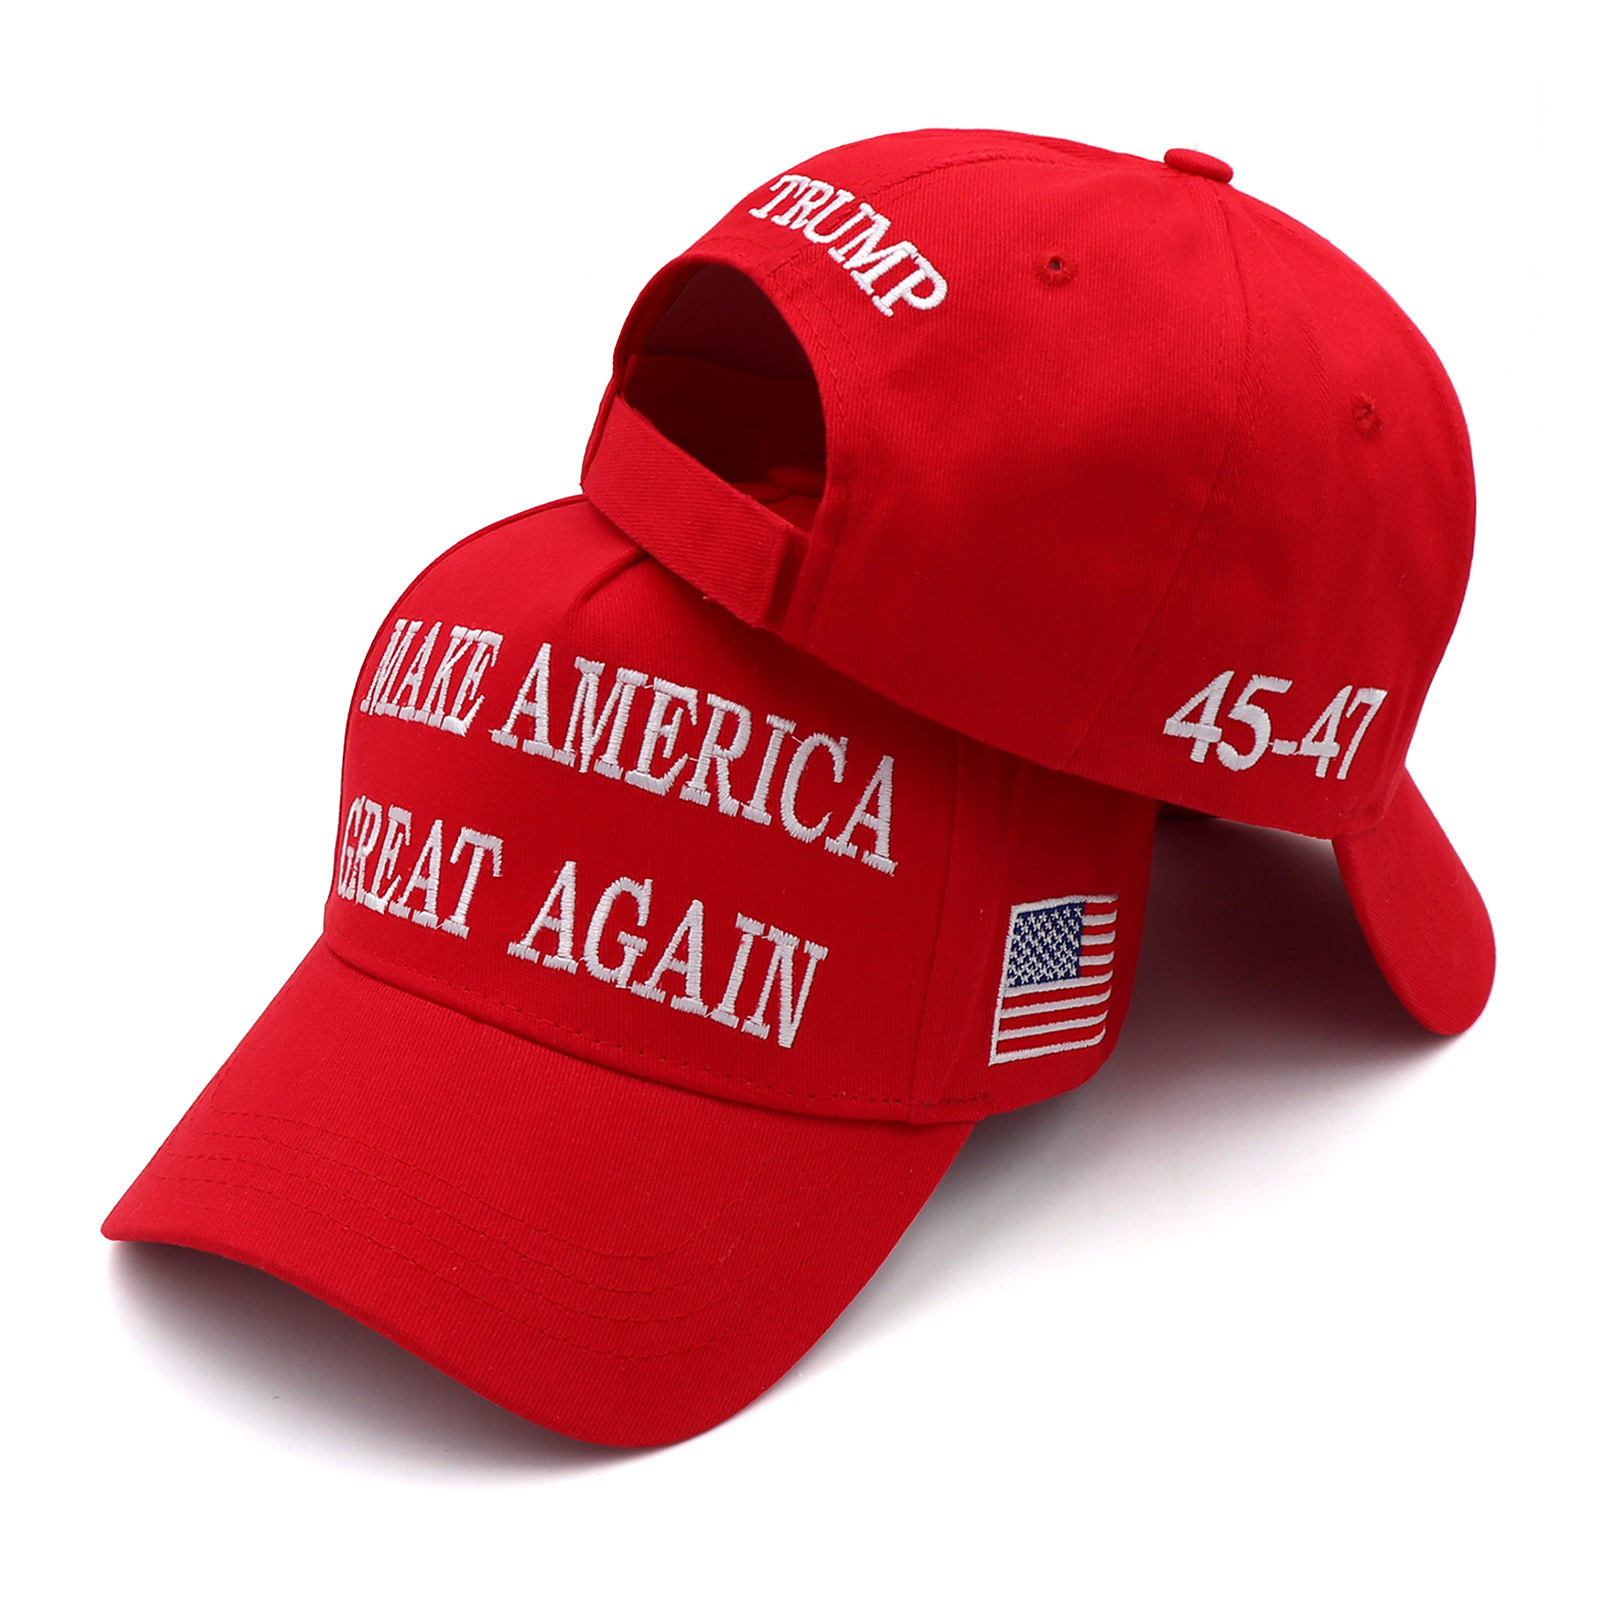 Trump Activity Party Hüte Baumwolle Stickerei Baseball Cap Trump 45-47. Make America Great Again Sportmütze